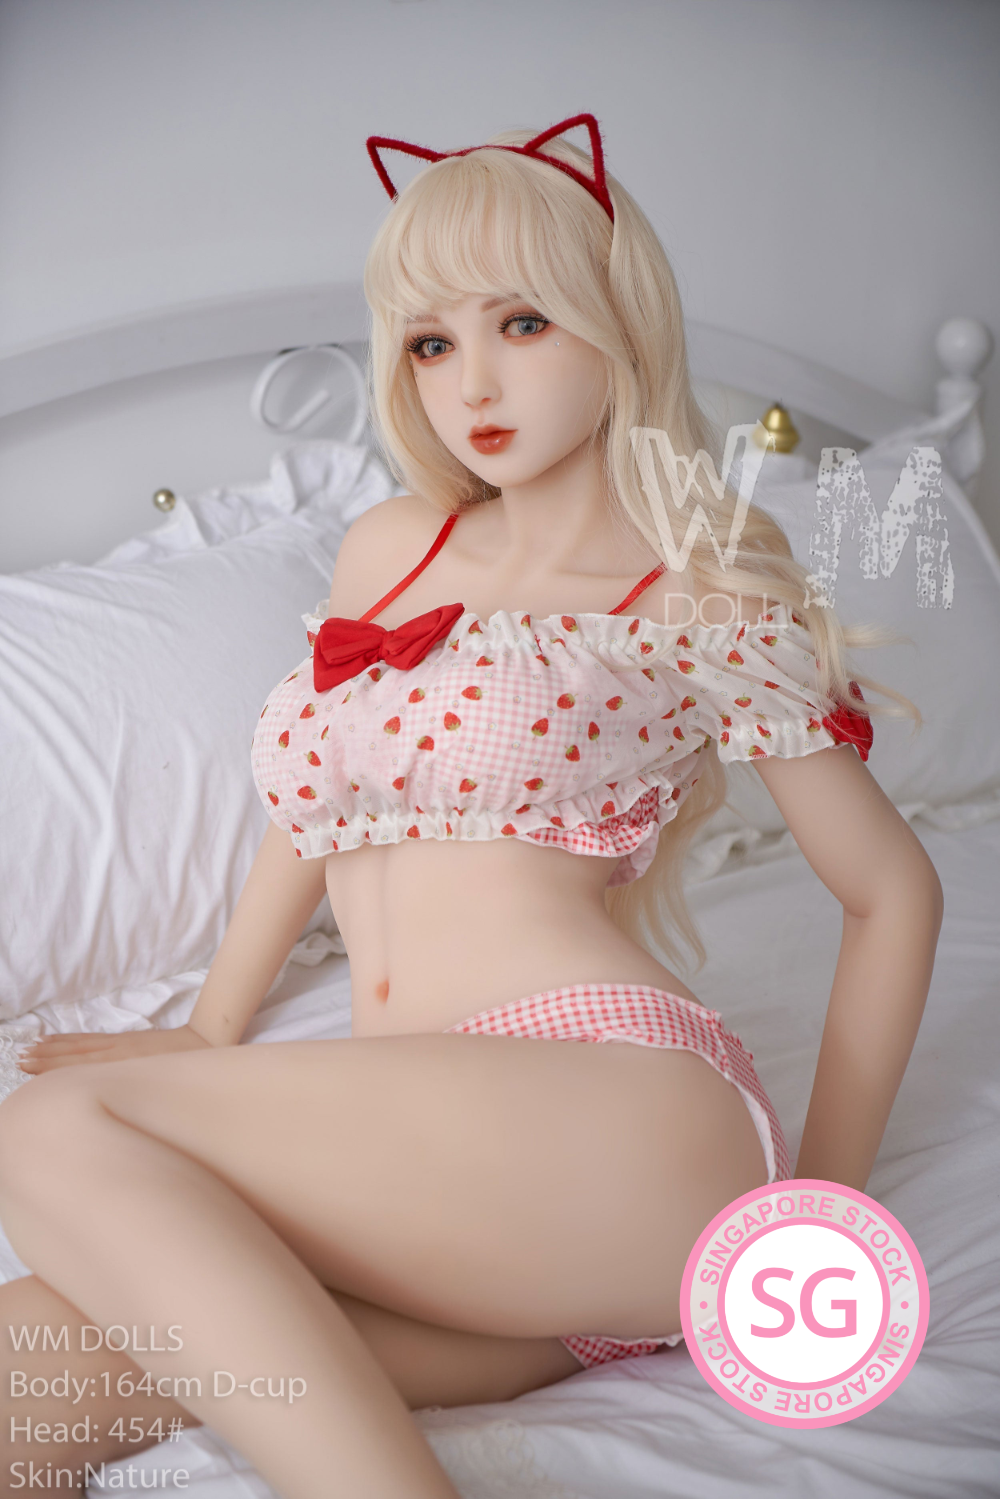 WM DOLL 164 CM D TPE (SG) | Buy Sex Dolls at DOLLS ACTUALLY